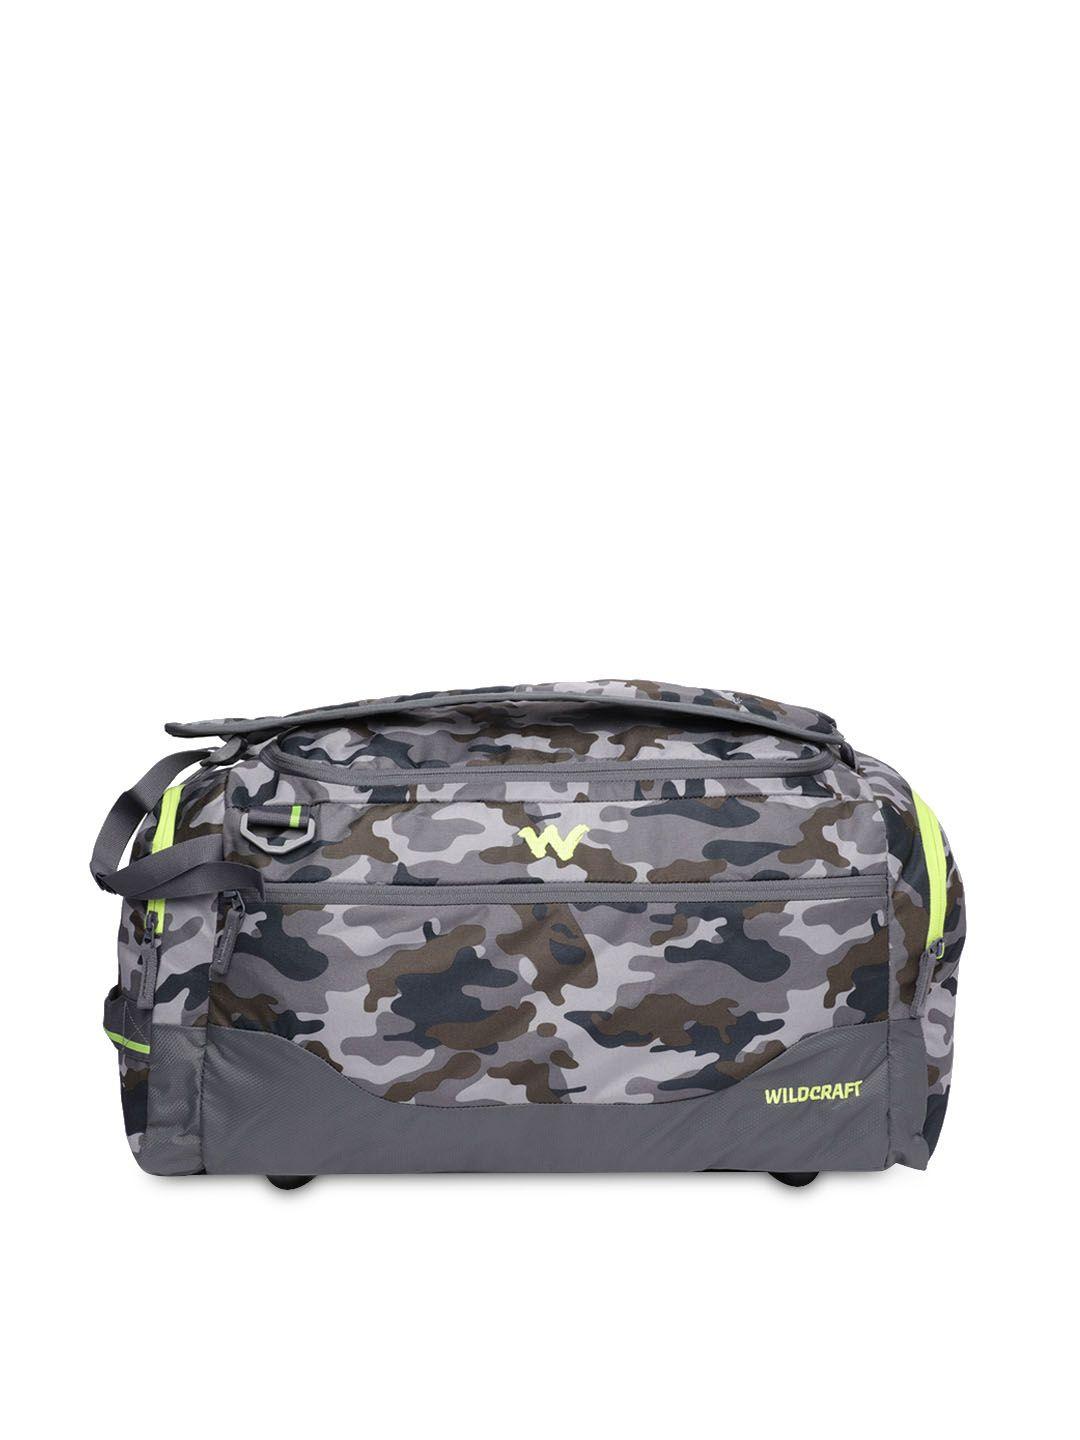 wildcraft unisex grey & black venturer camouflage printed trolley duffel bag